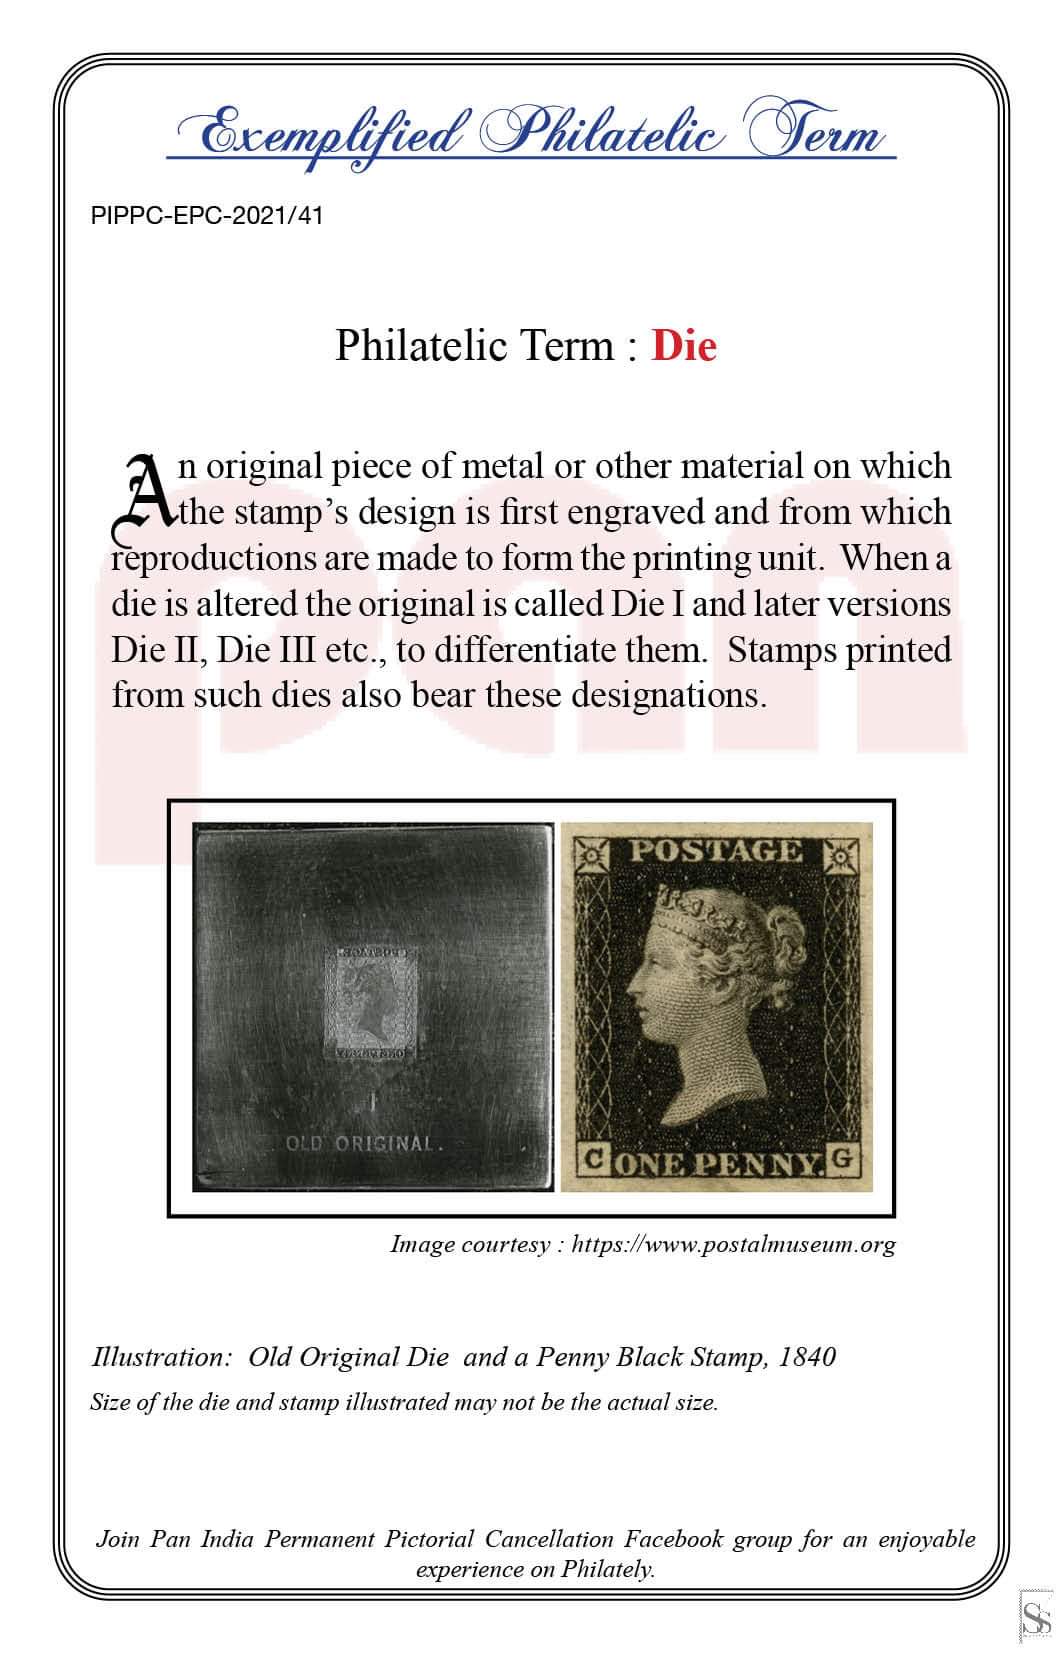 41. Today's Exemplified Philatelic term-Die